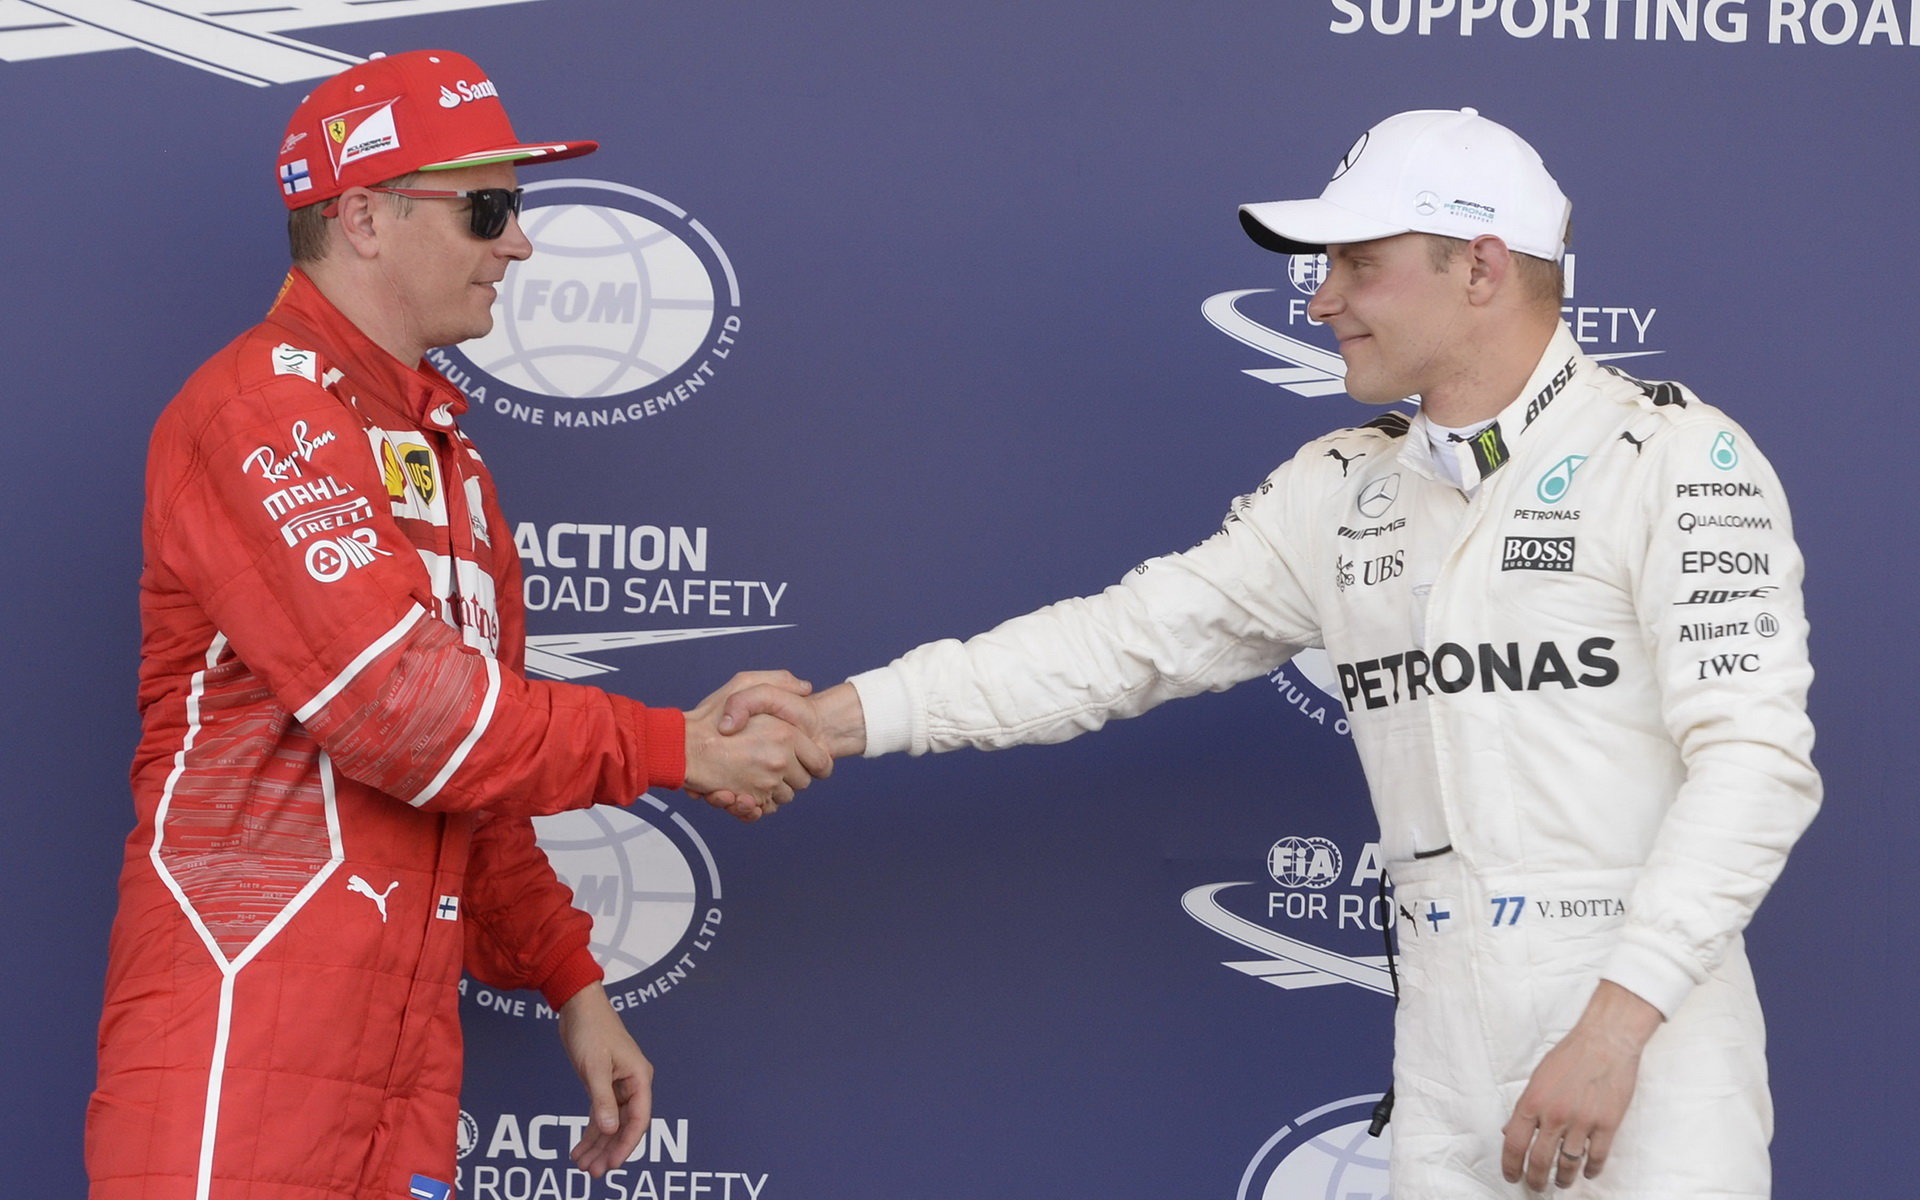 Kimi Räikkönen a krajan Valtteri Bottas po kvalifikaci v Baku